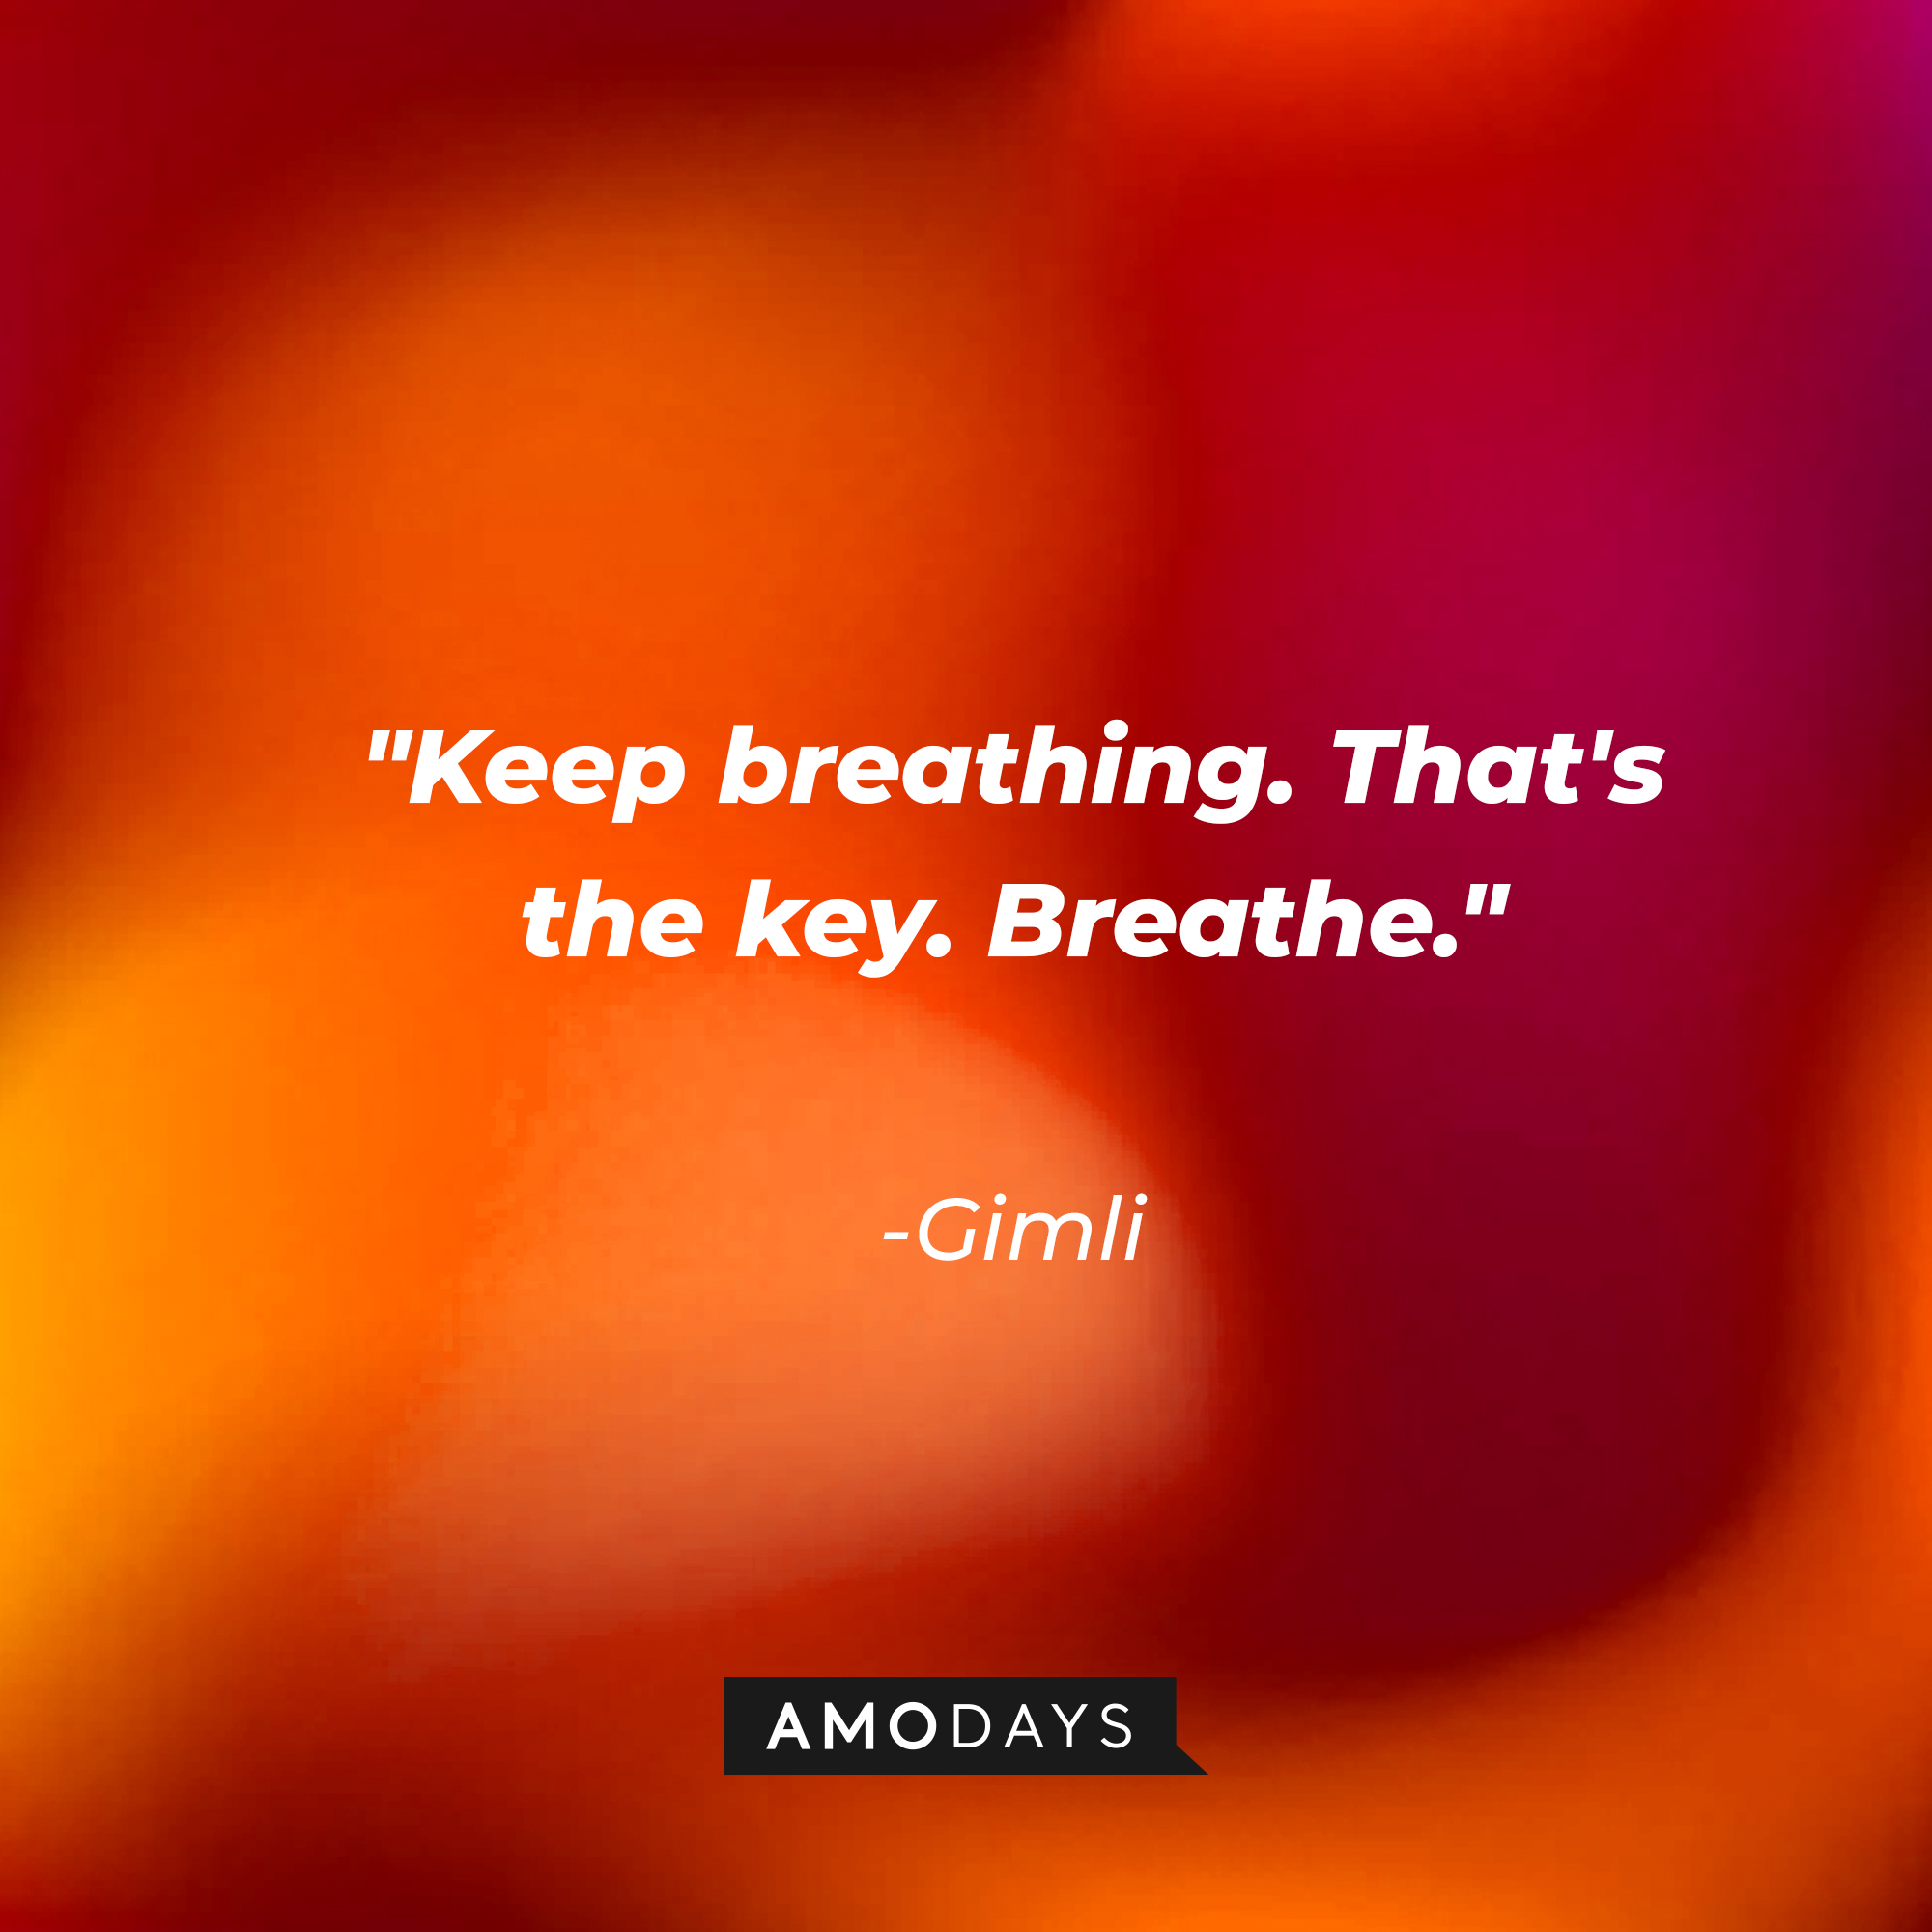 Gimli's quote: "Keep breathing. That's the key. Breathe." | Source: AmoDays